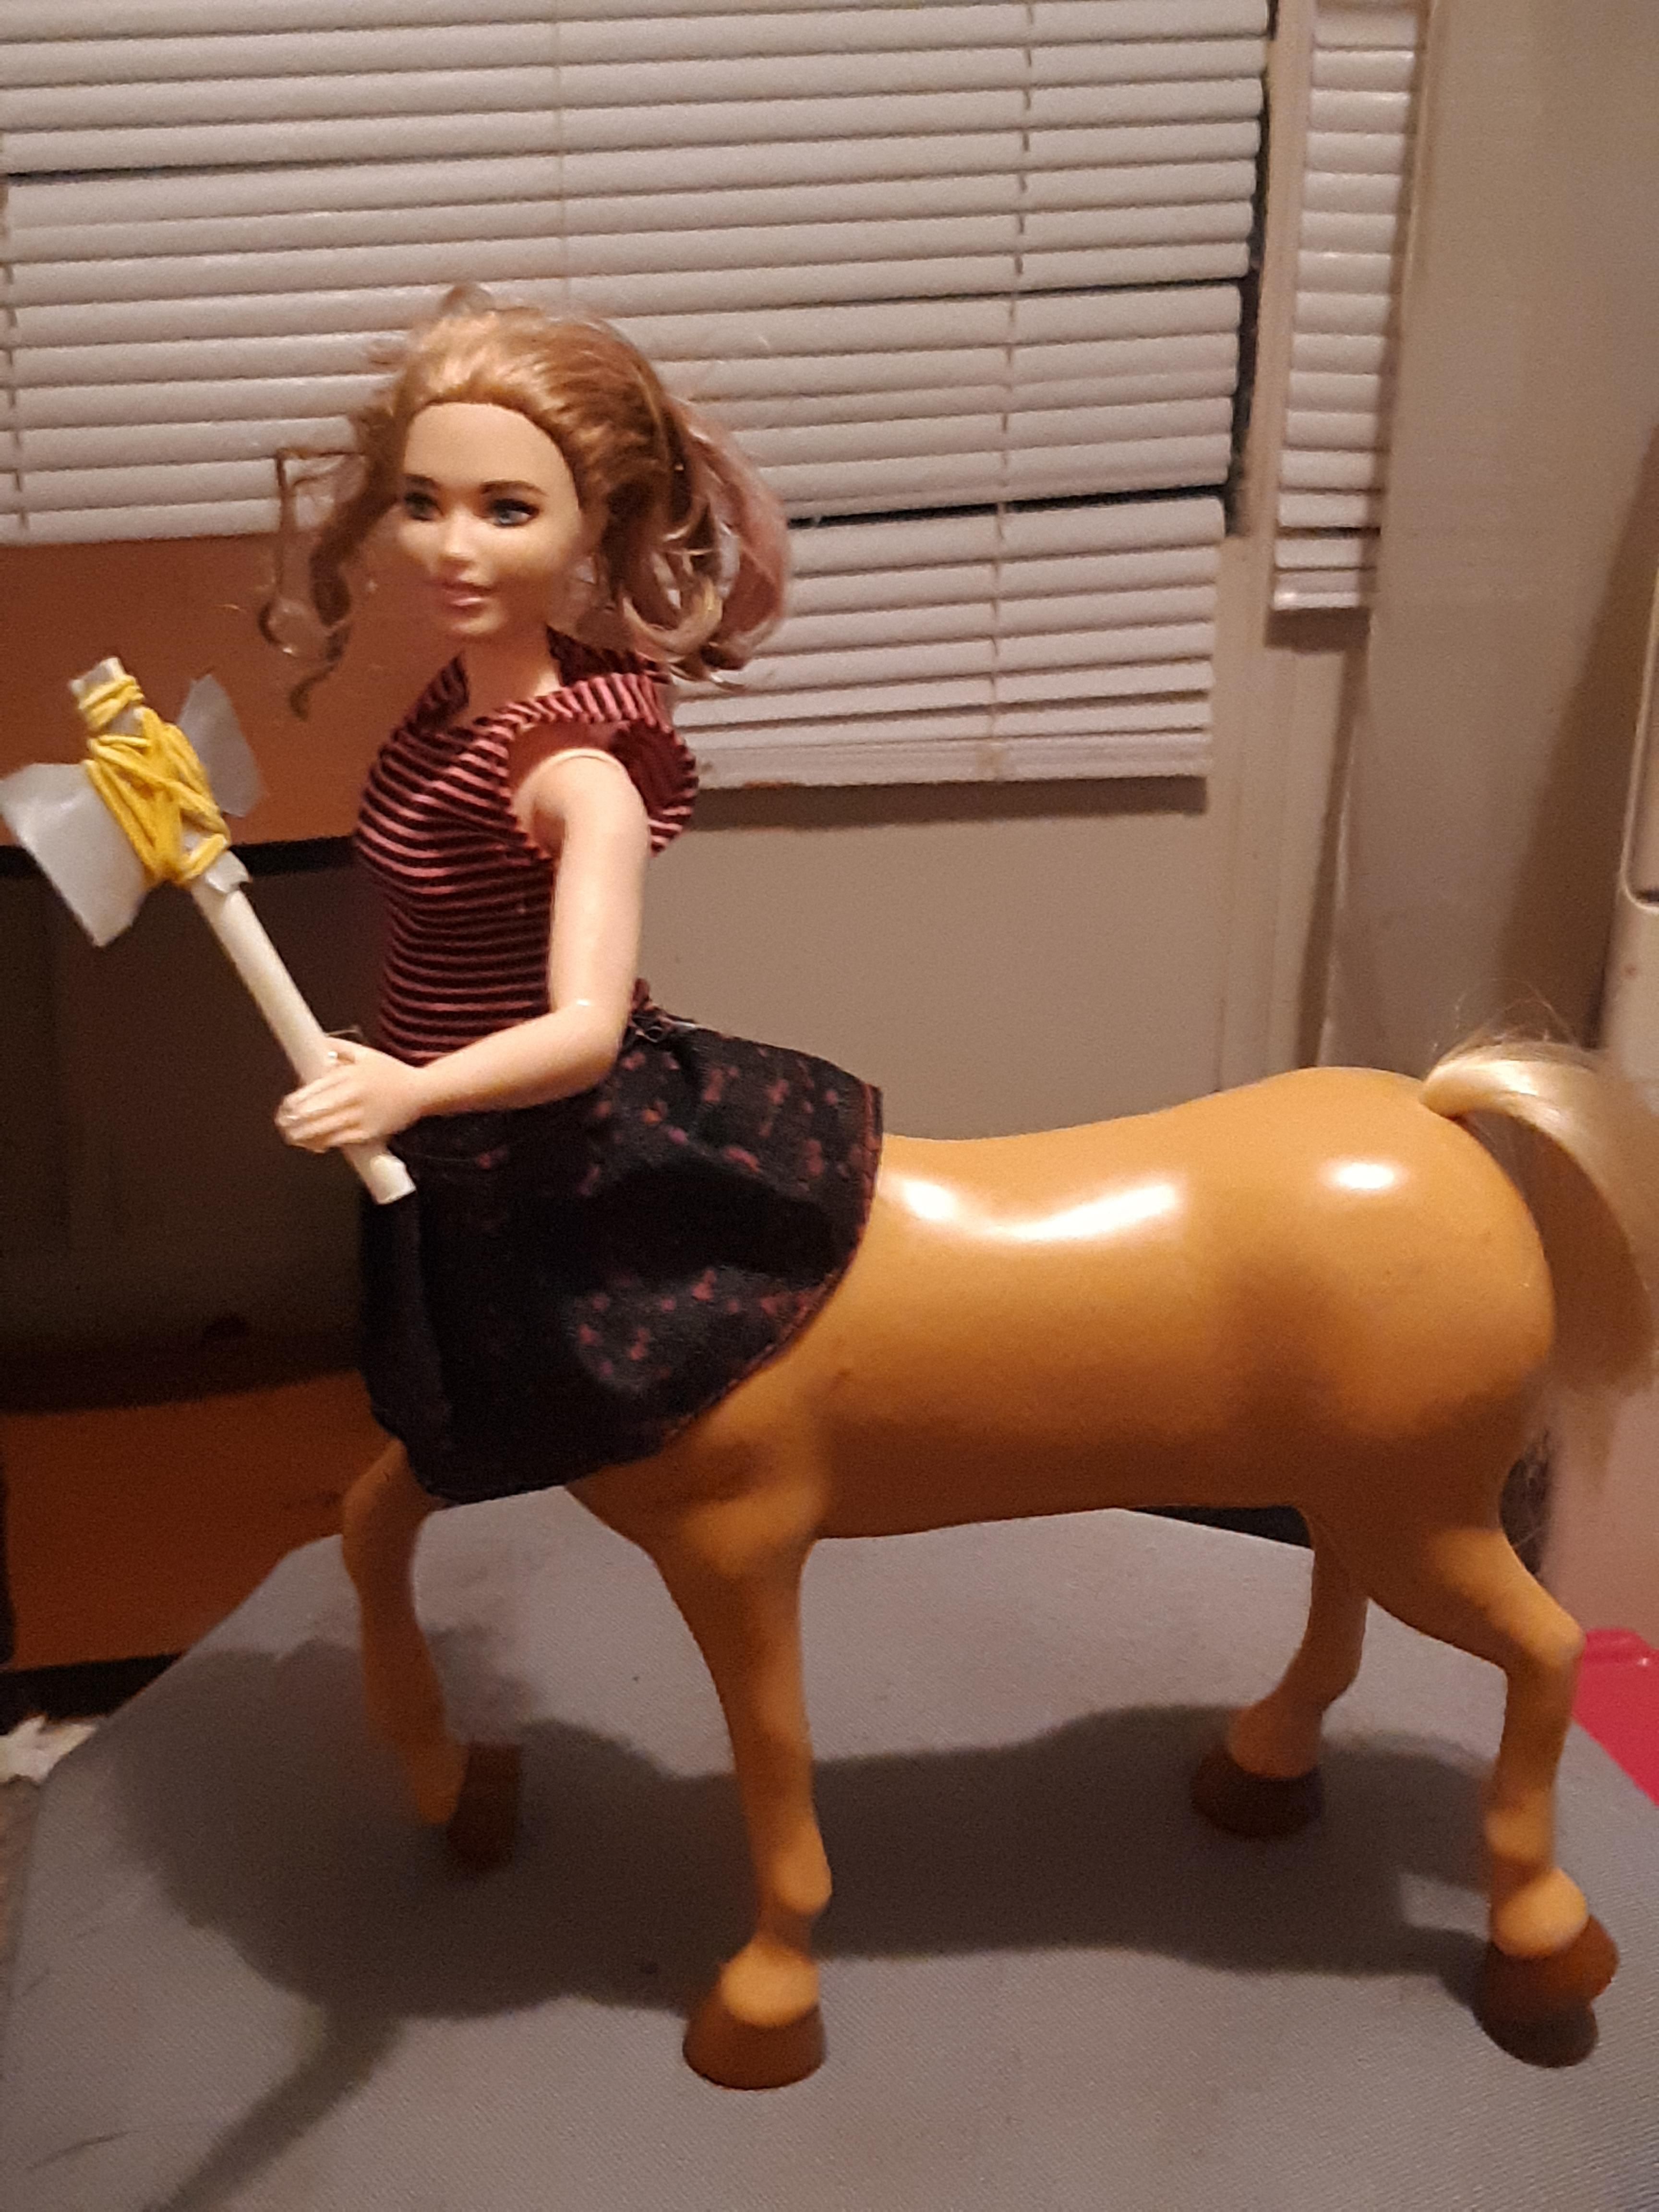 Daughter wanted Barbie centaur ...Introducing Barbitaur.